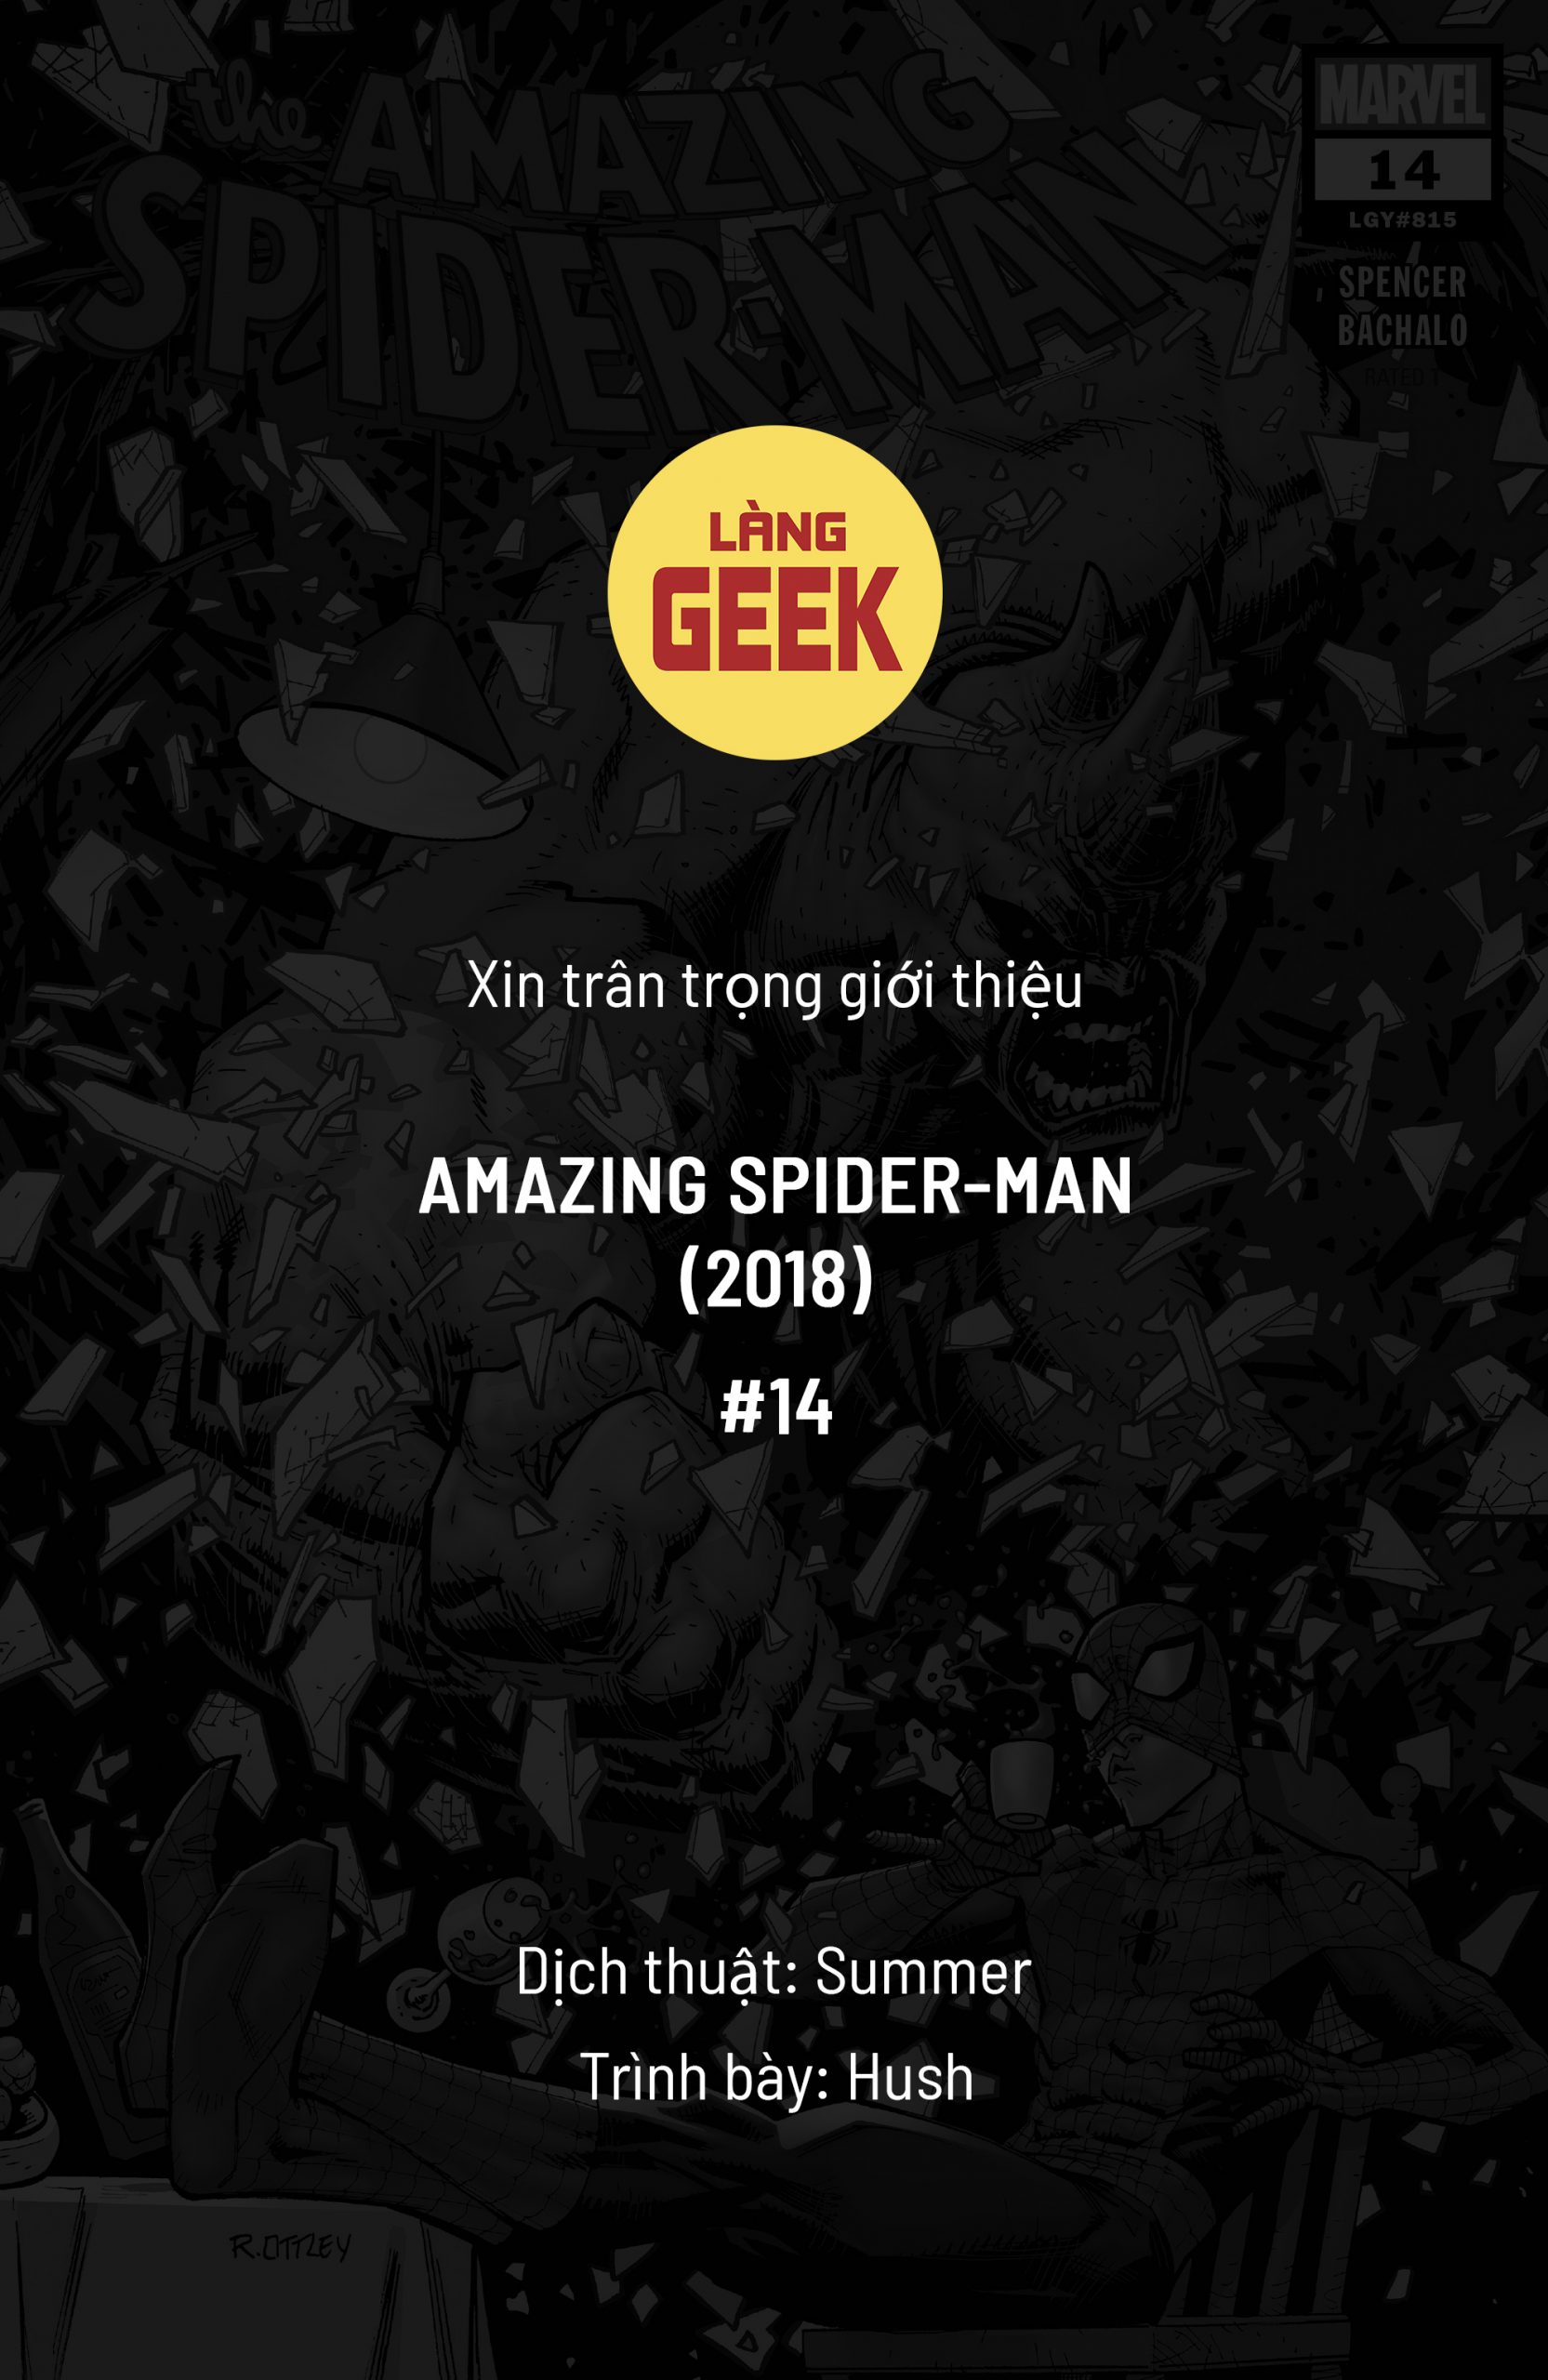 https://langgeek.net/wp-content/webpc-passthru.php?src=https://langgeek.net/wp-content/uploads/2022/01/Amazing-Spider-Man-014-00-scaled.jpg&nocache=1